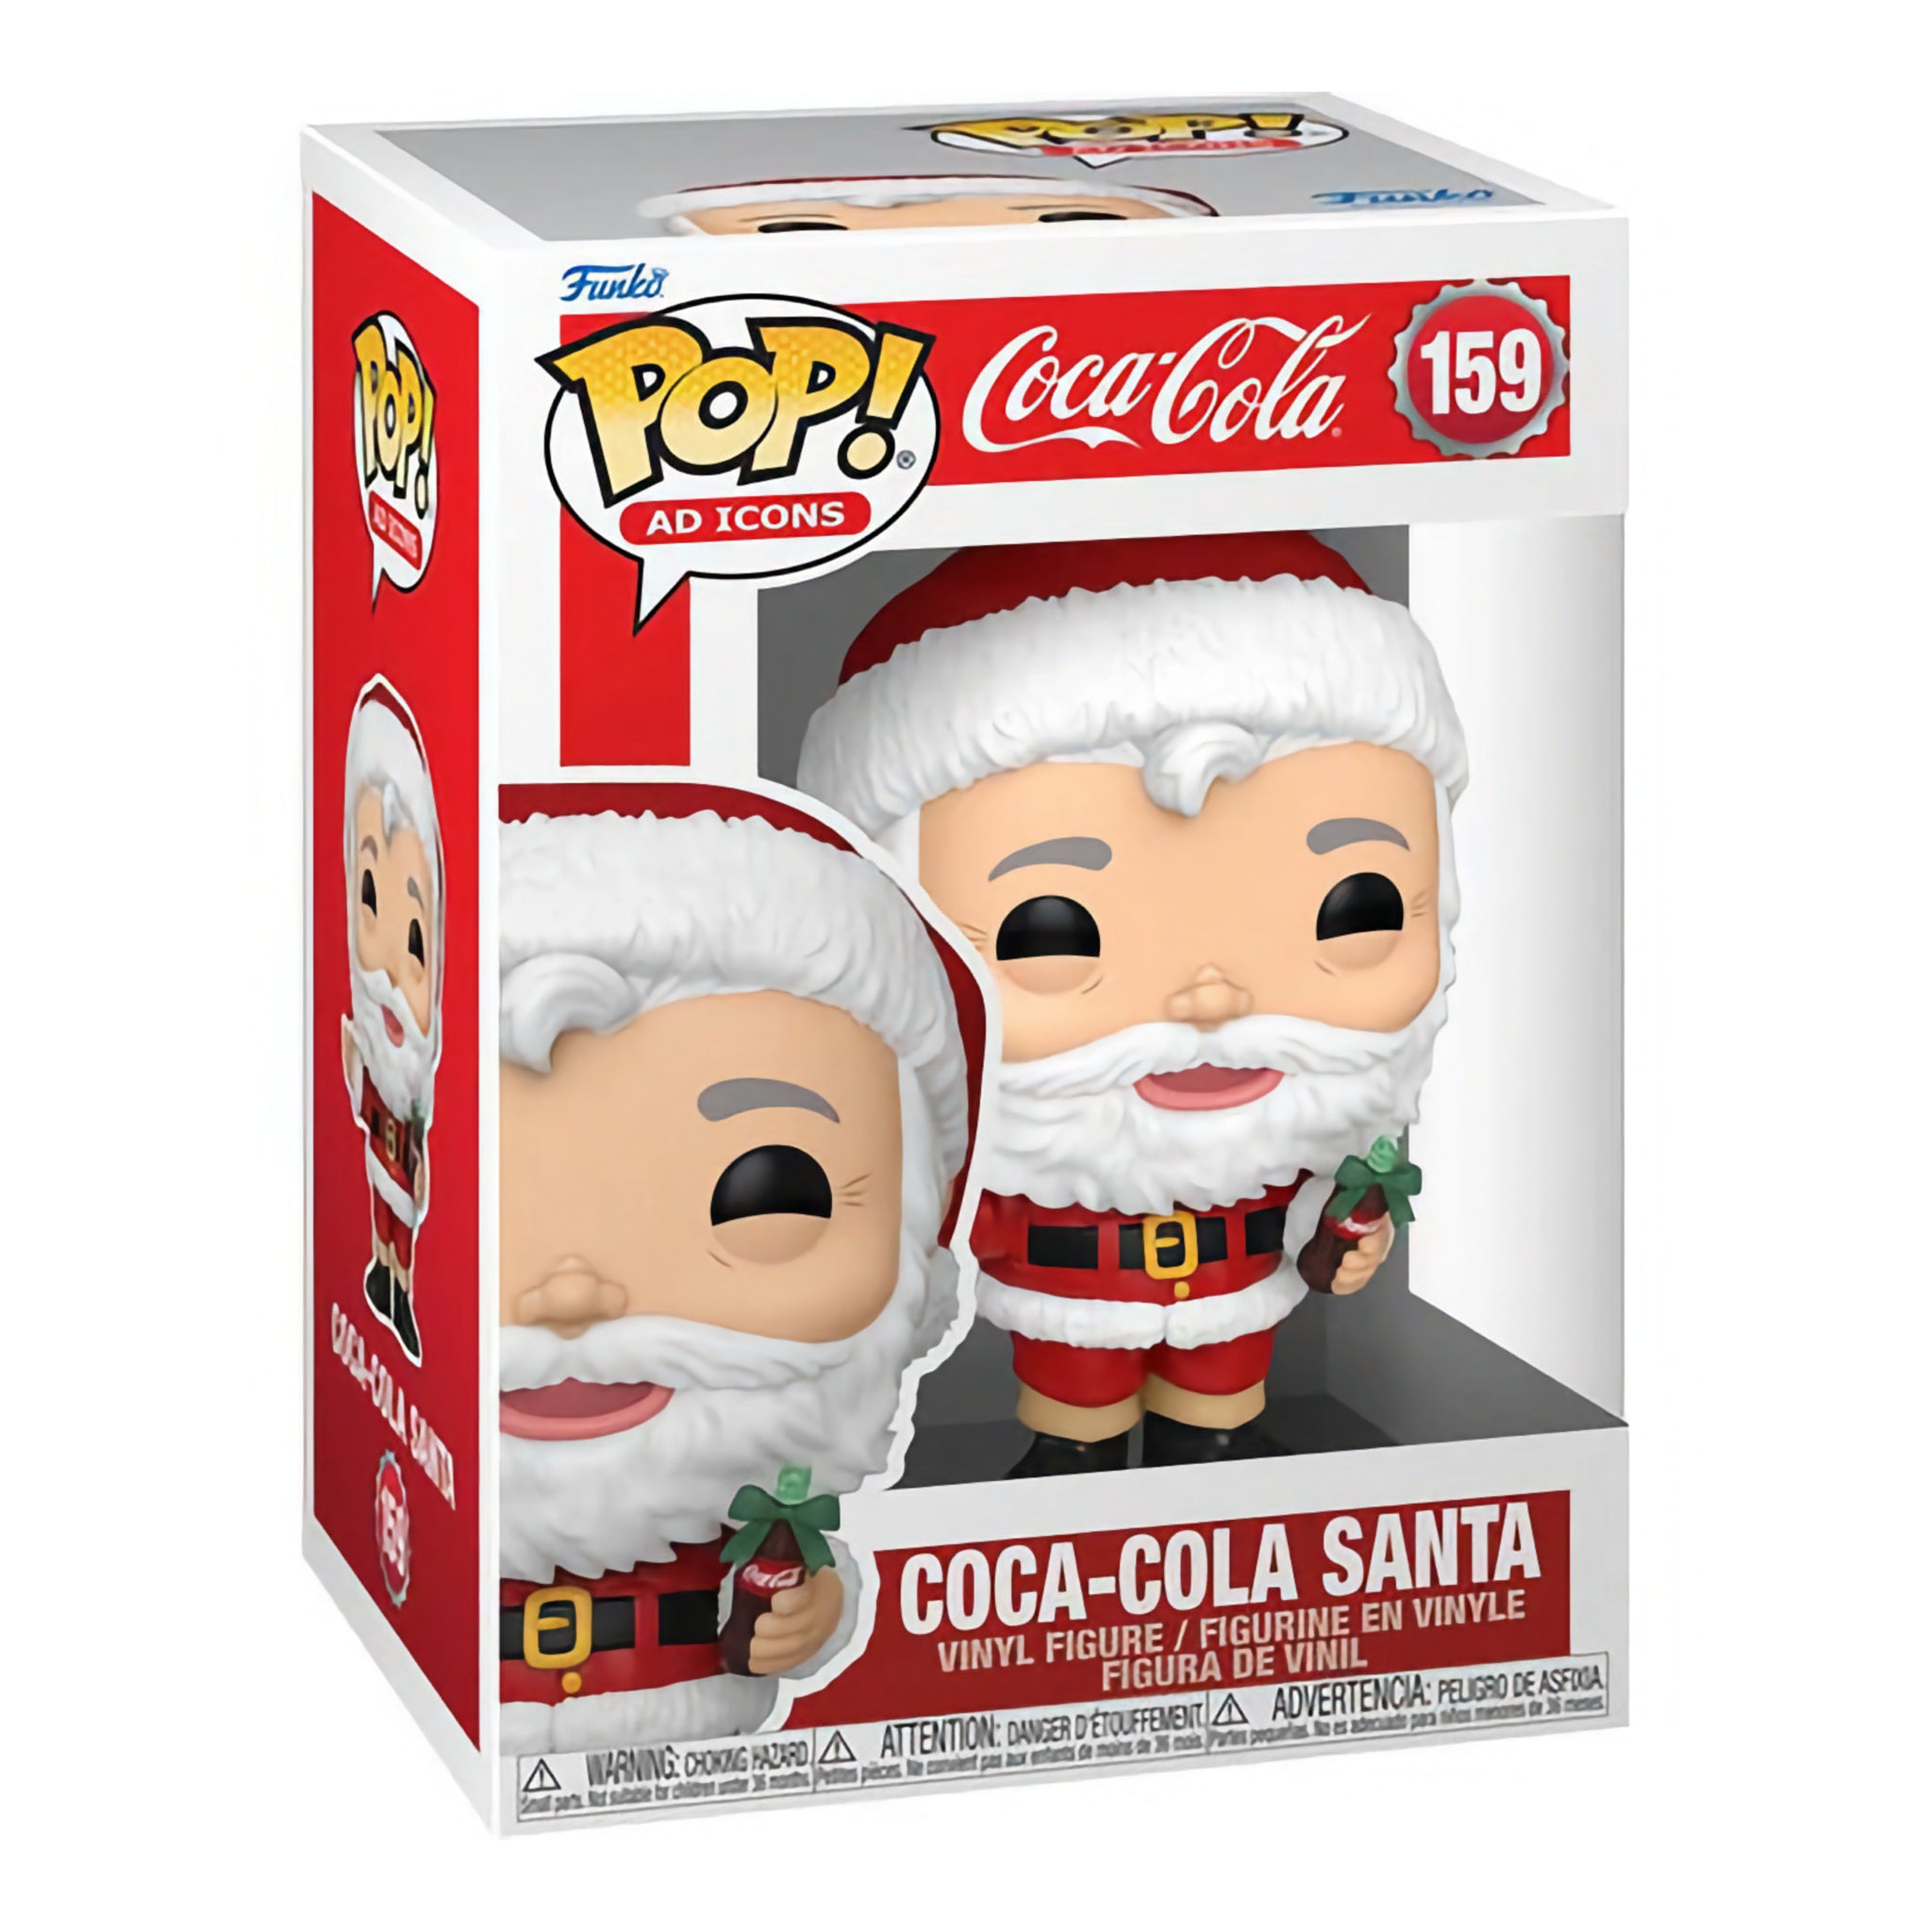 Coca-Cola Santa Funko Pop!